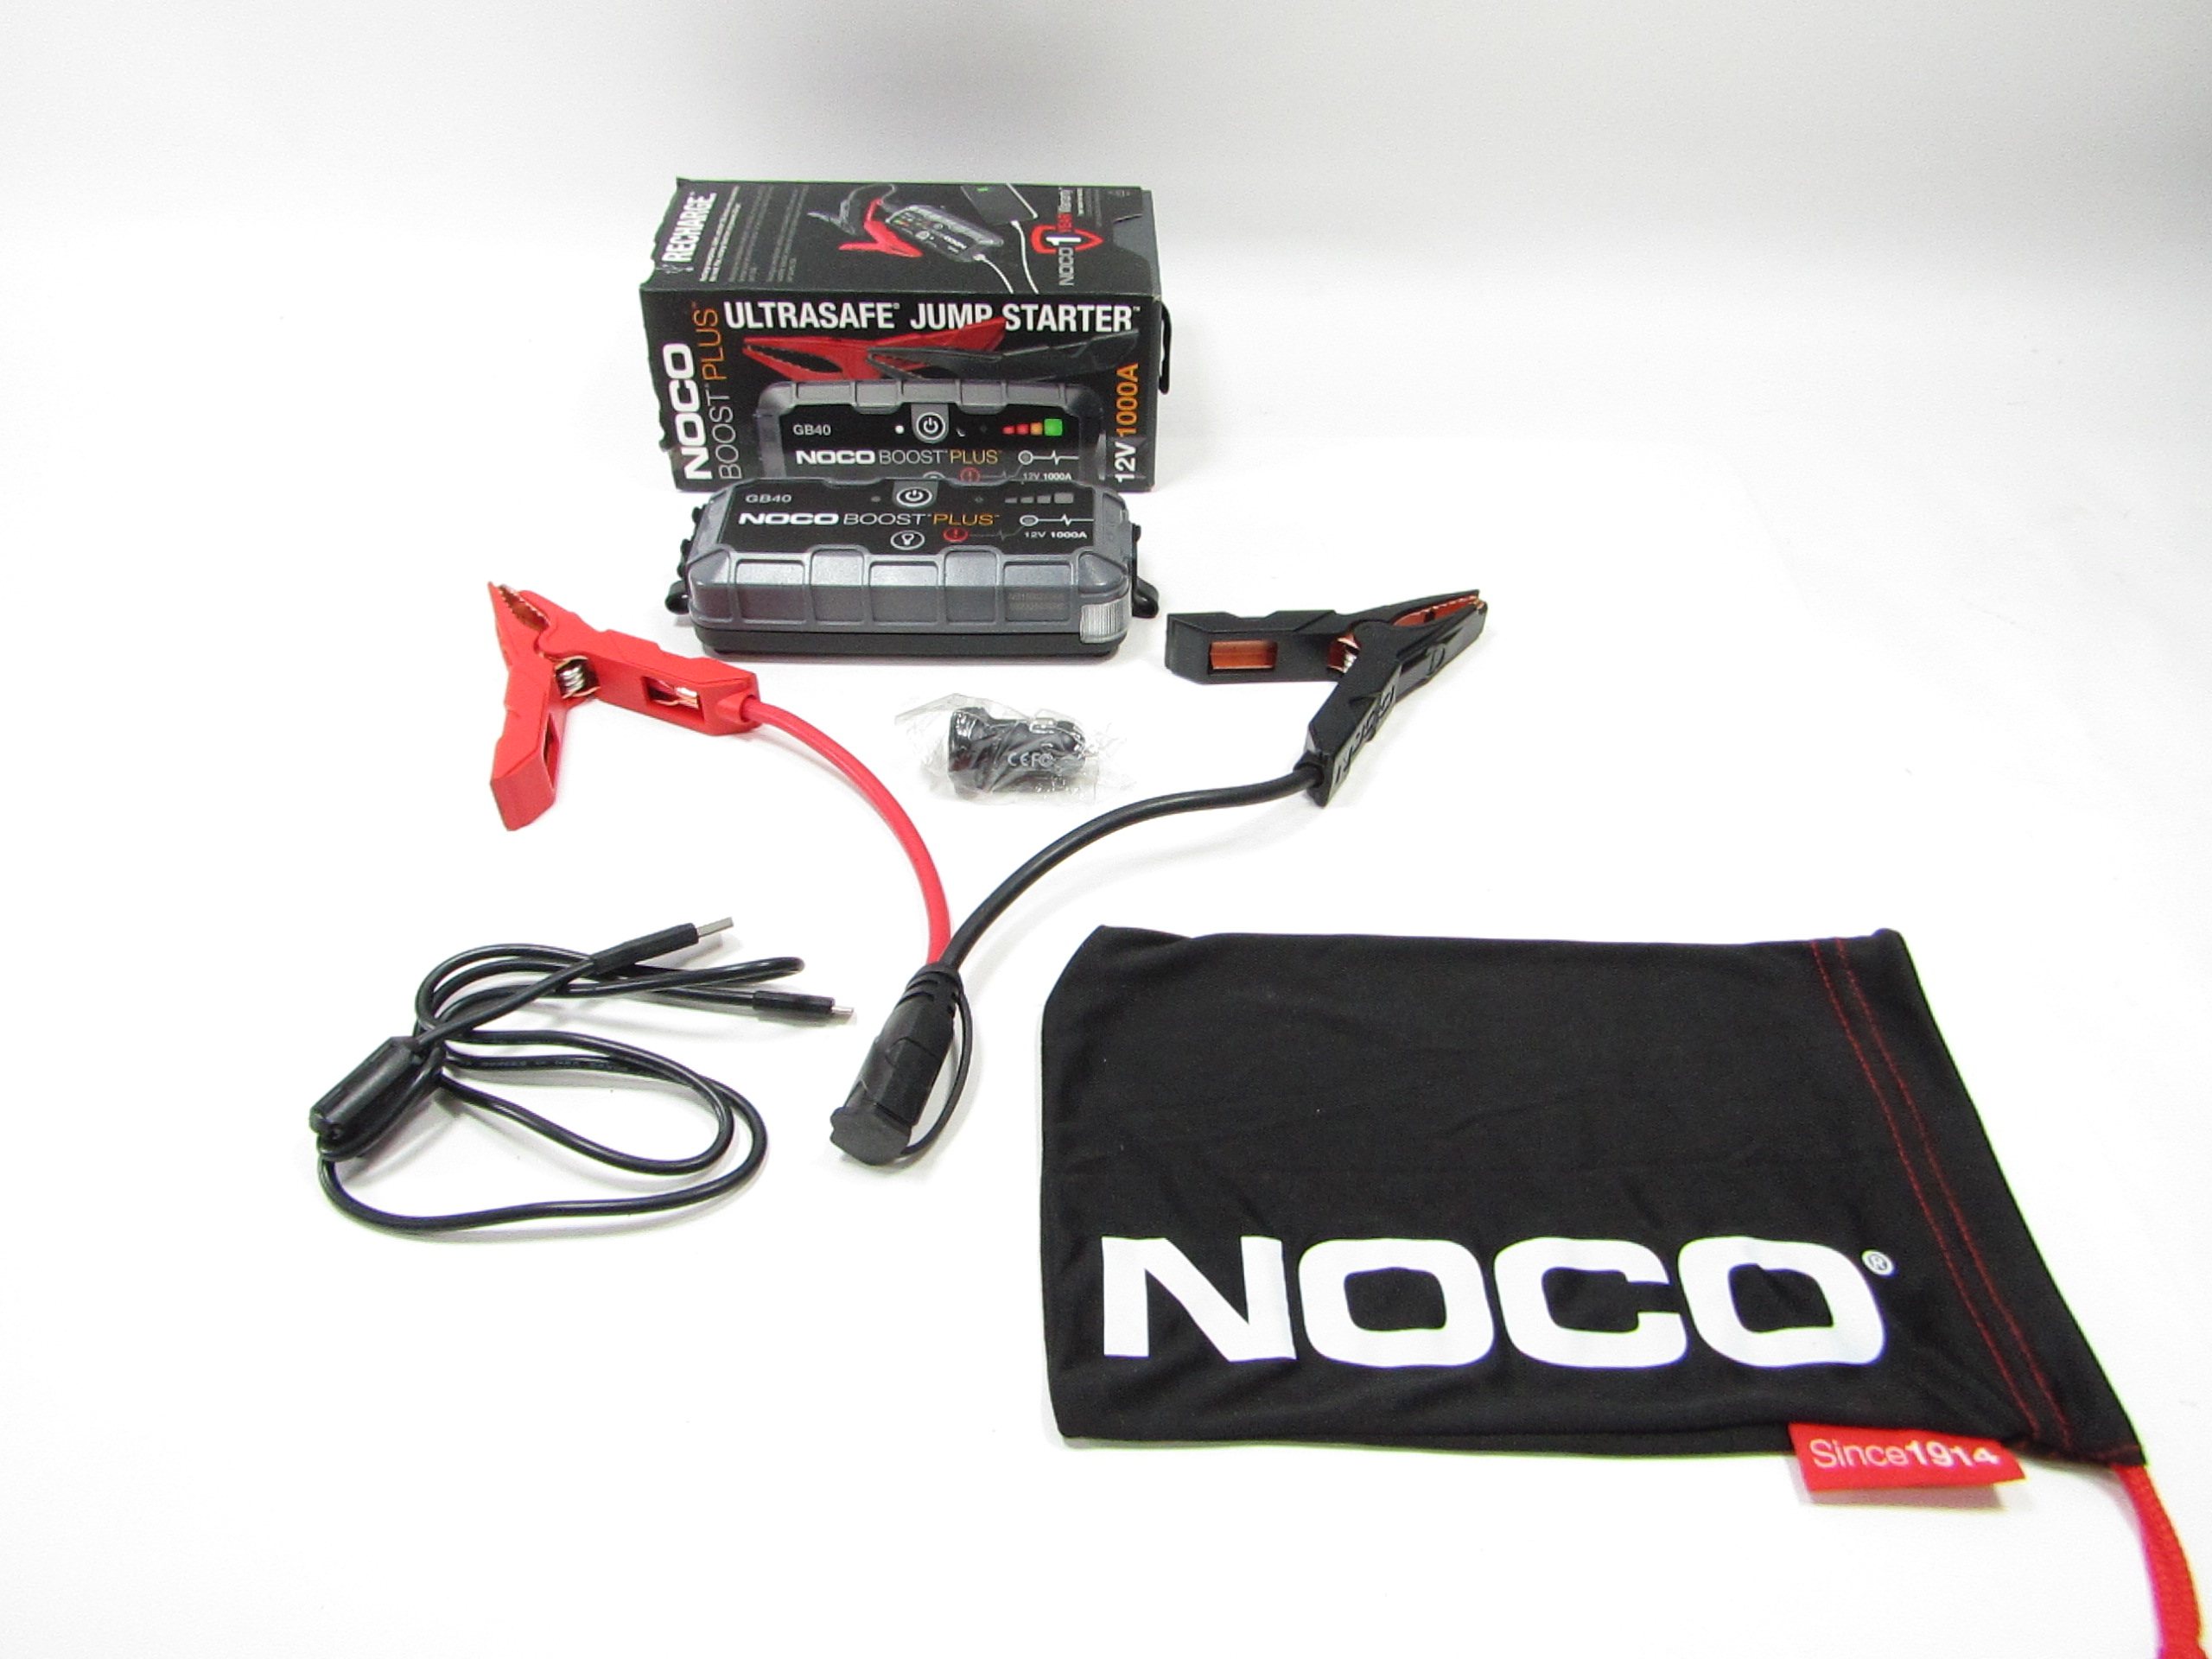 NOCO Boost Plus GB40 1000-Amp 12-Volt UltraSafe Lithium Jump